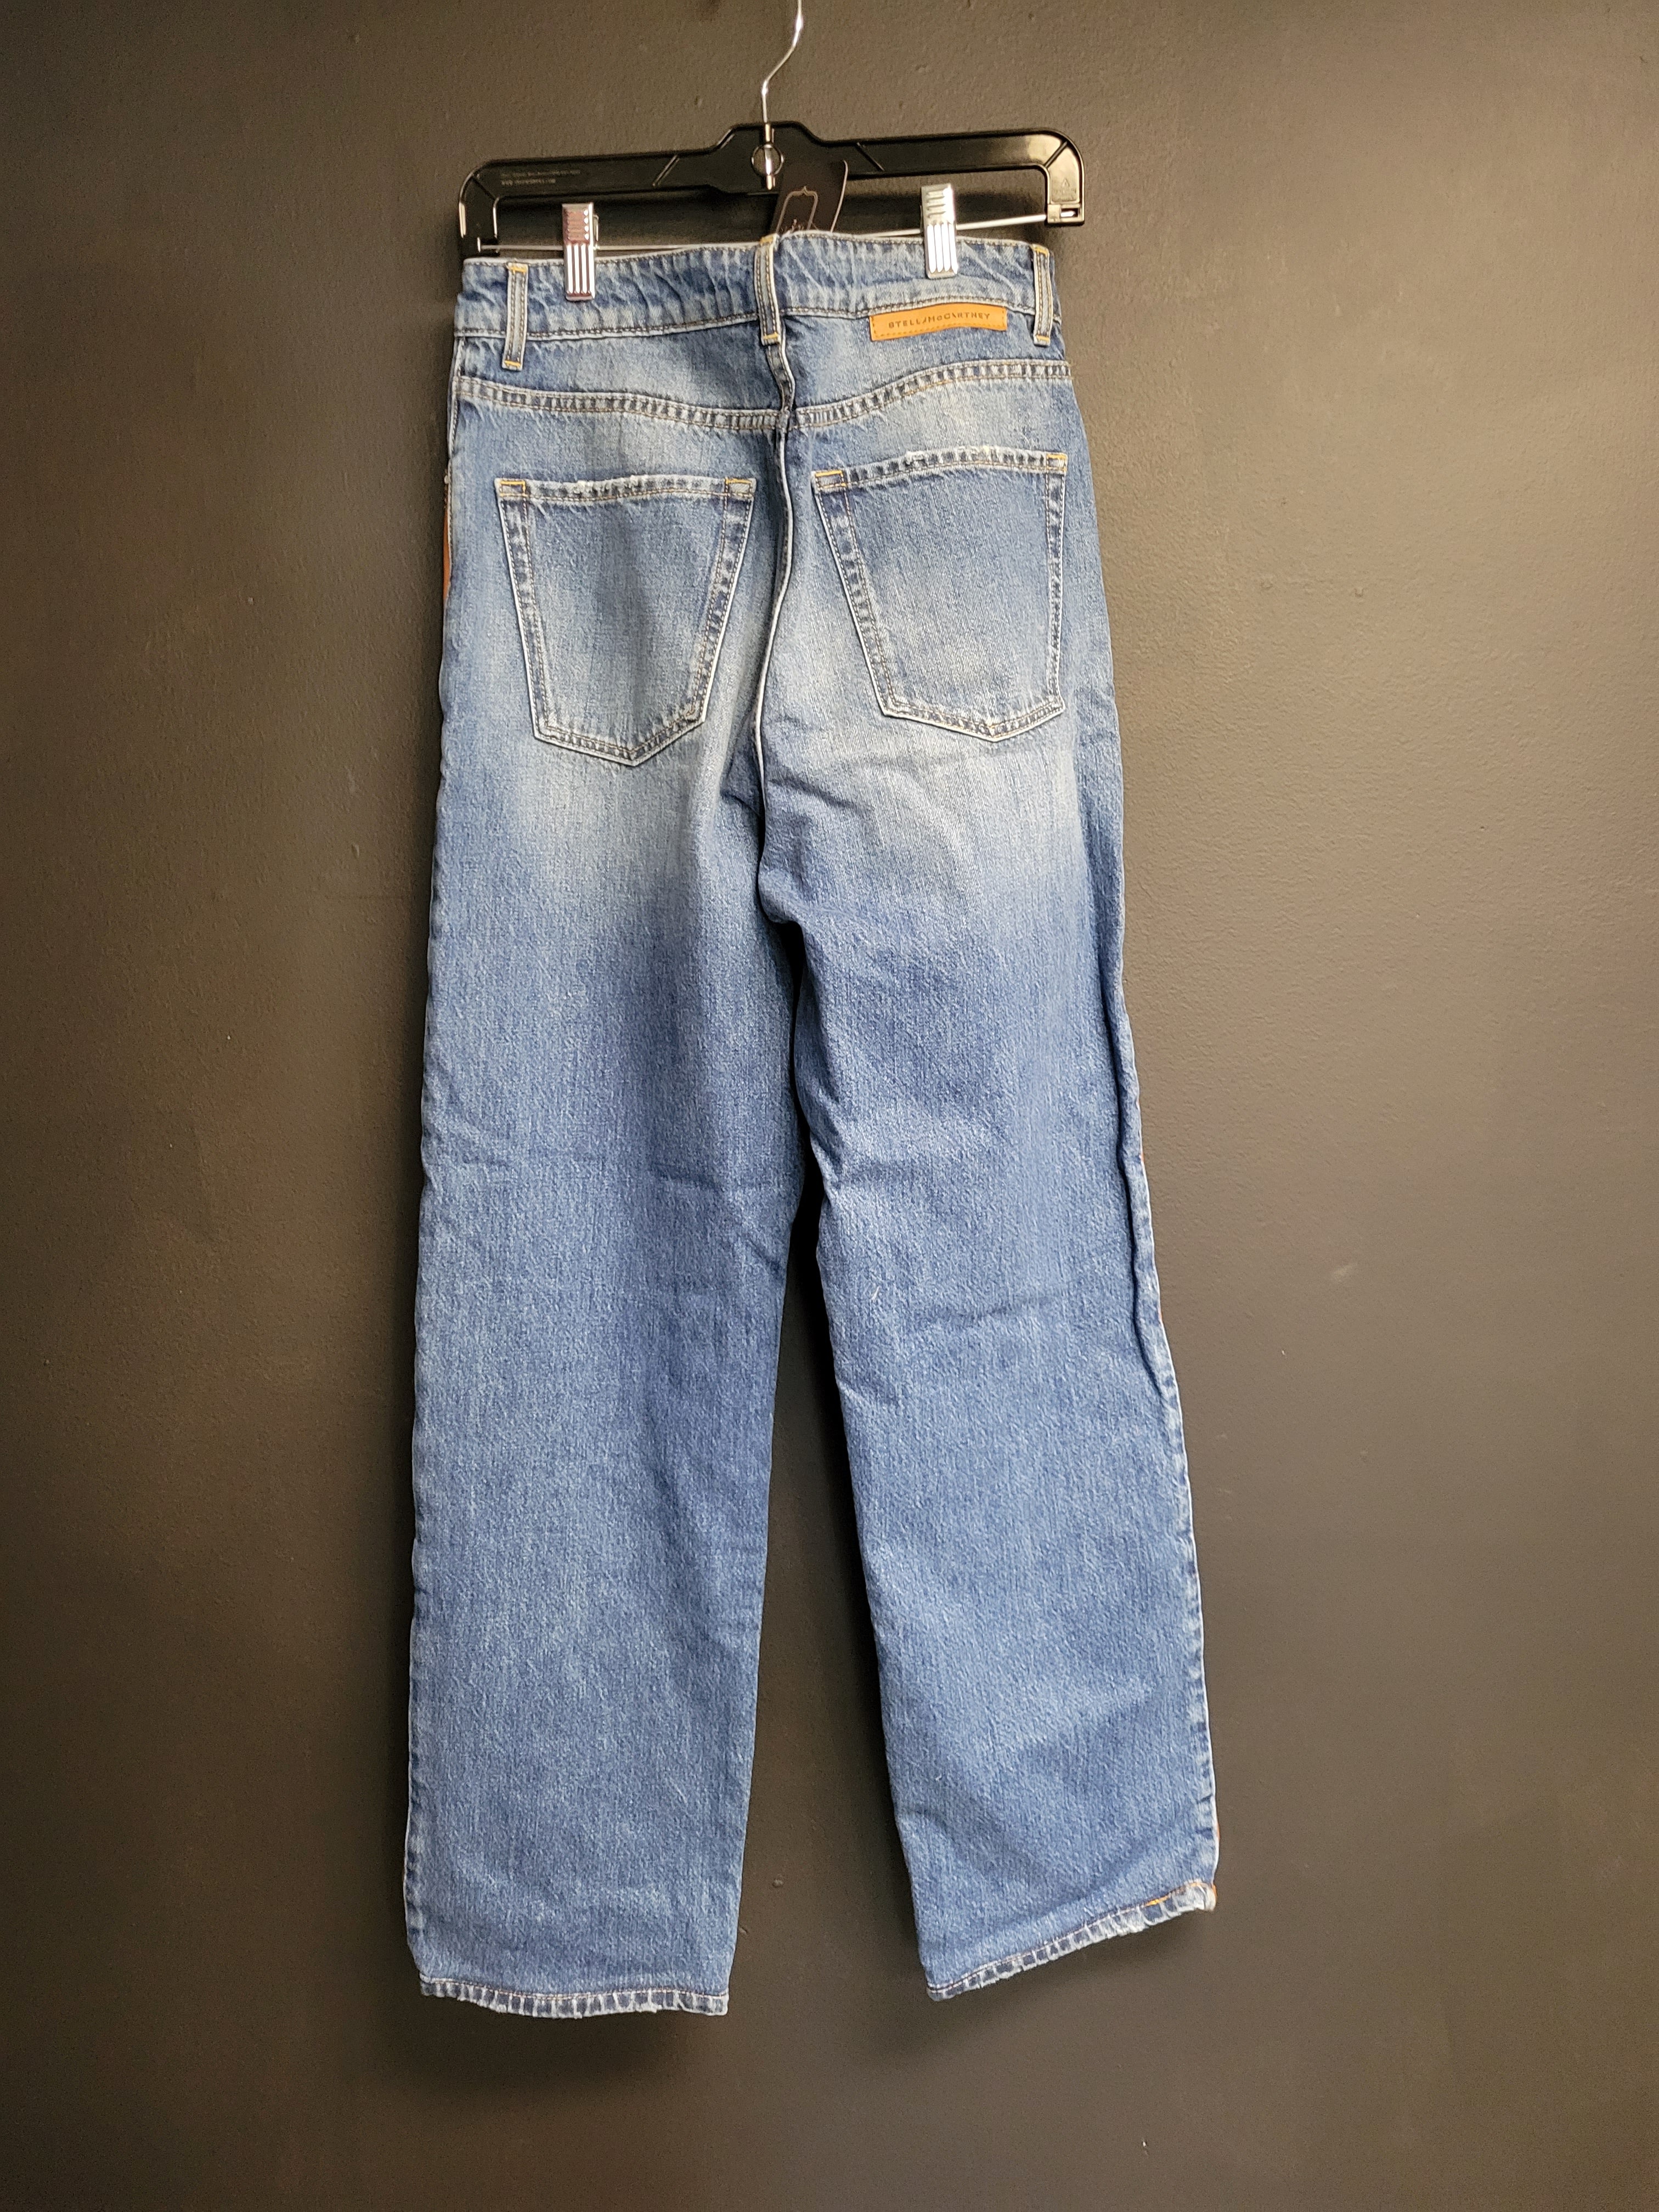 Stella McCartney Chap Jeans in Mid Blue Vintage SIZE 27